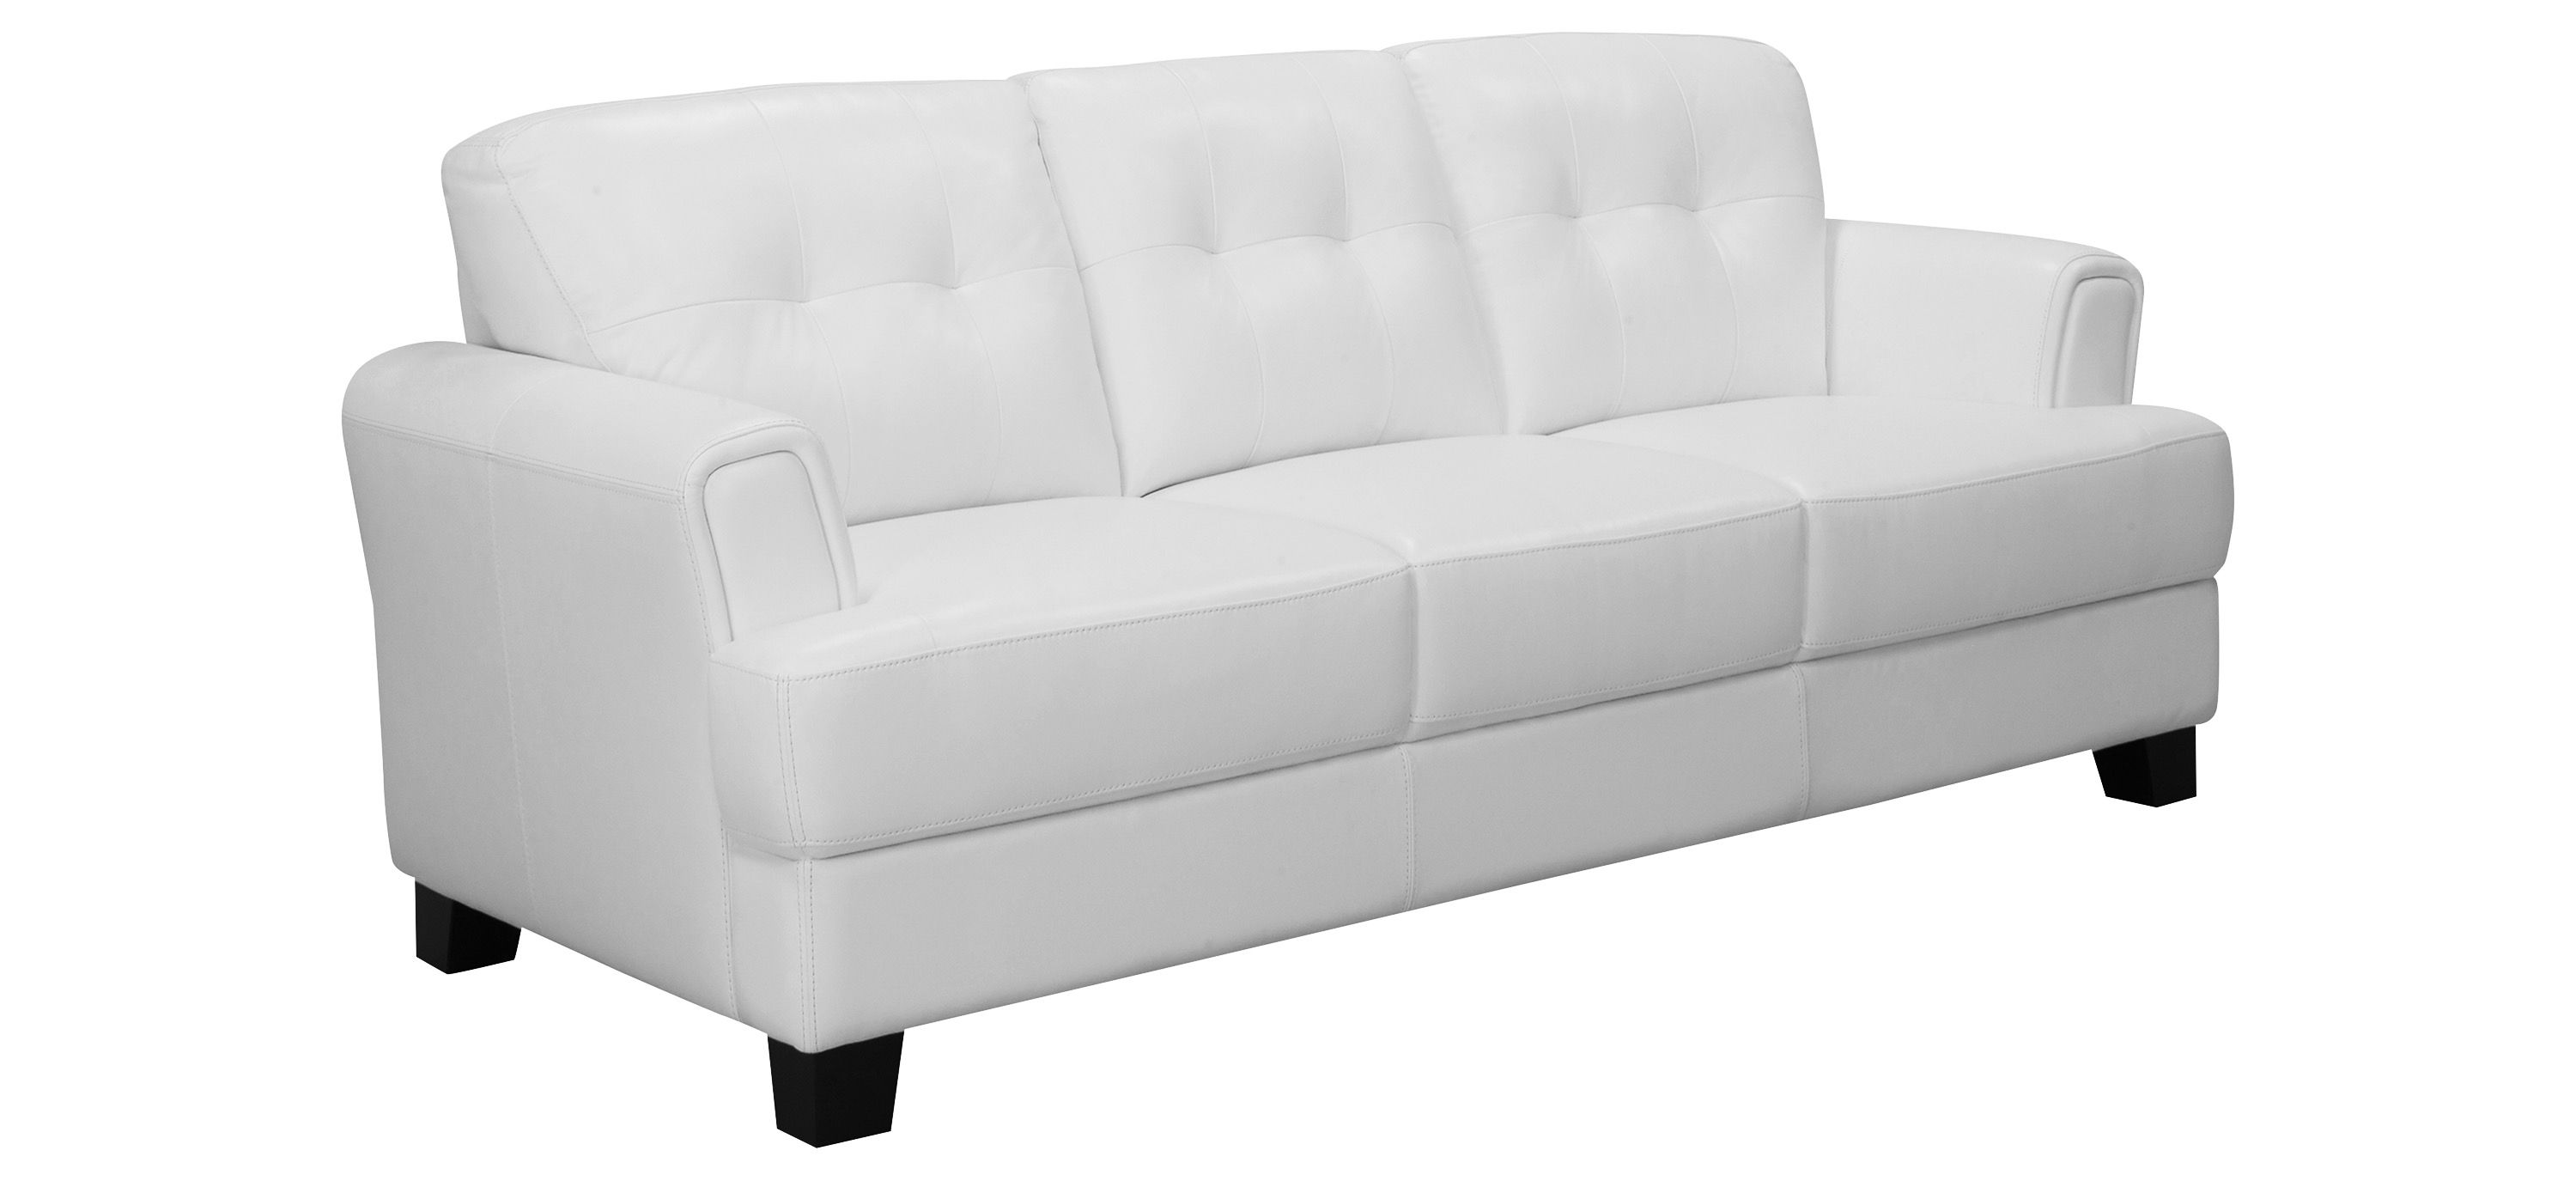 Benson Leather Sofa